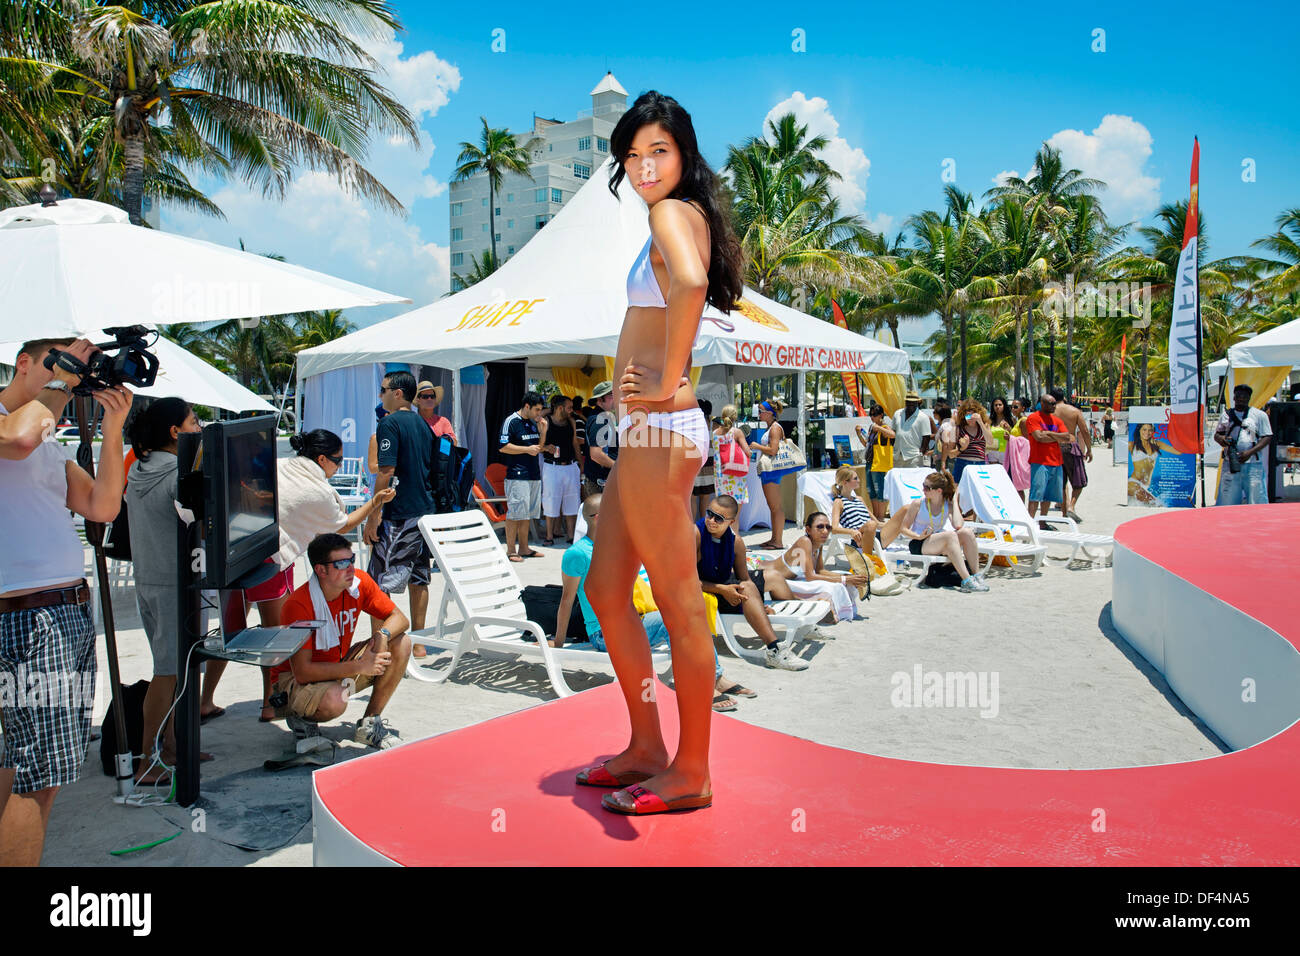 Bikini contest, South Beach, Art deco district, Miami beach, Florida, USA  Stock Photo - Alamy